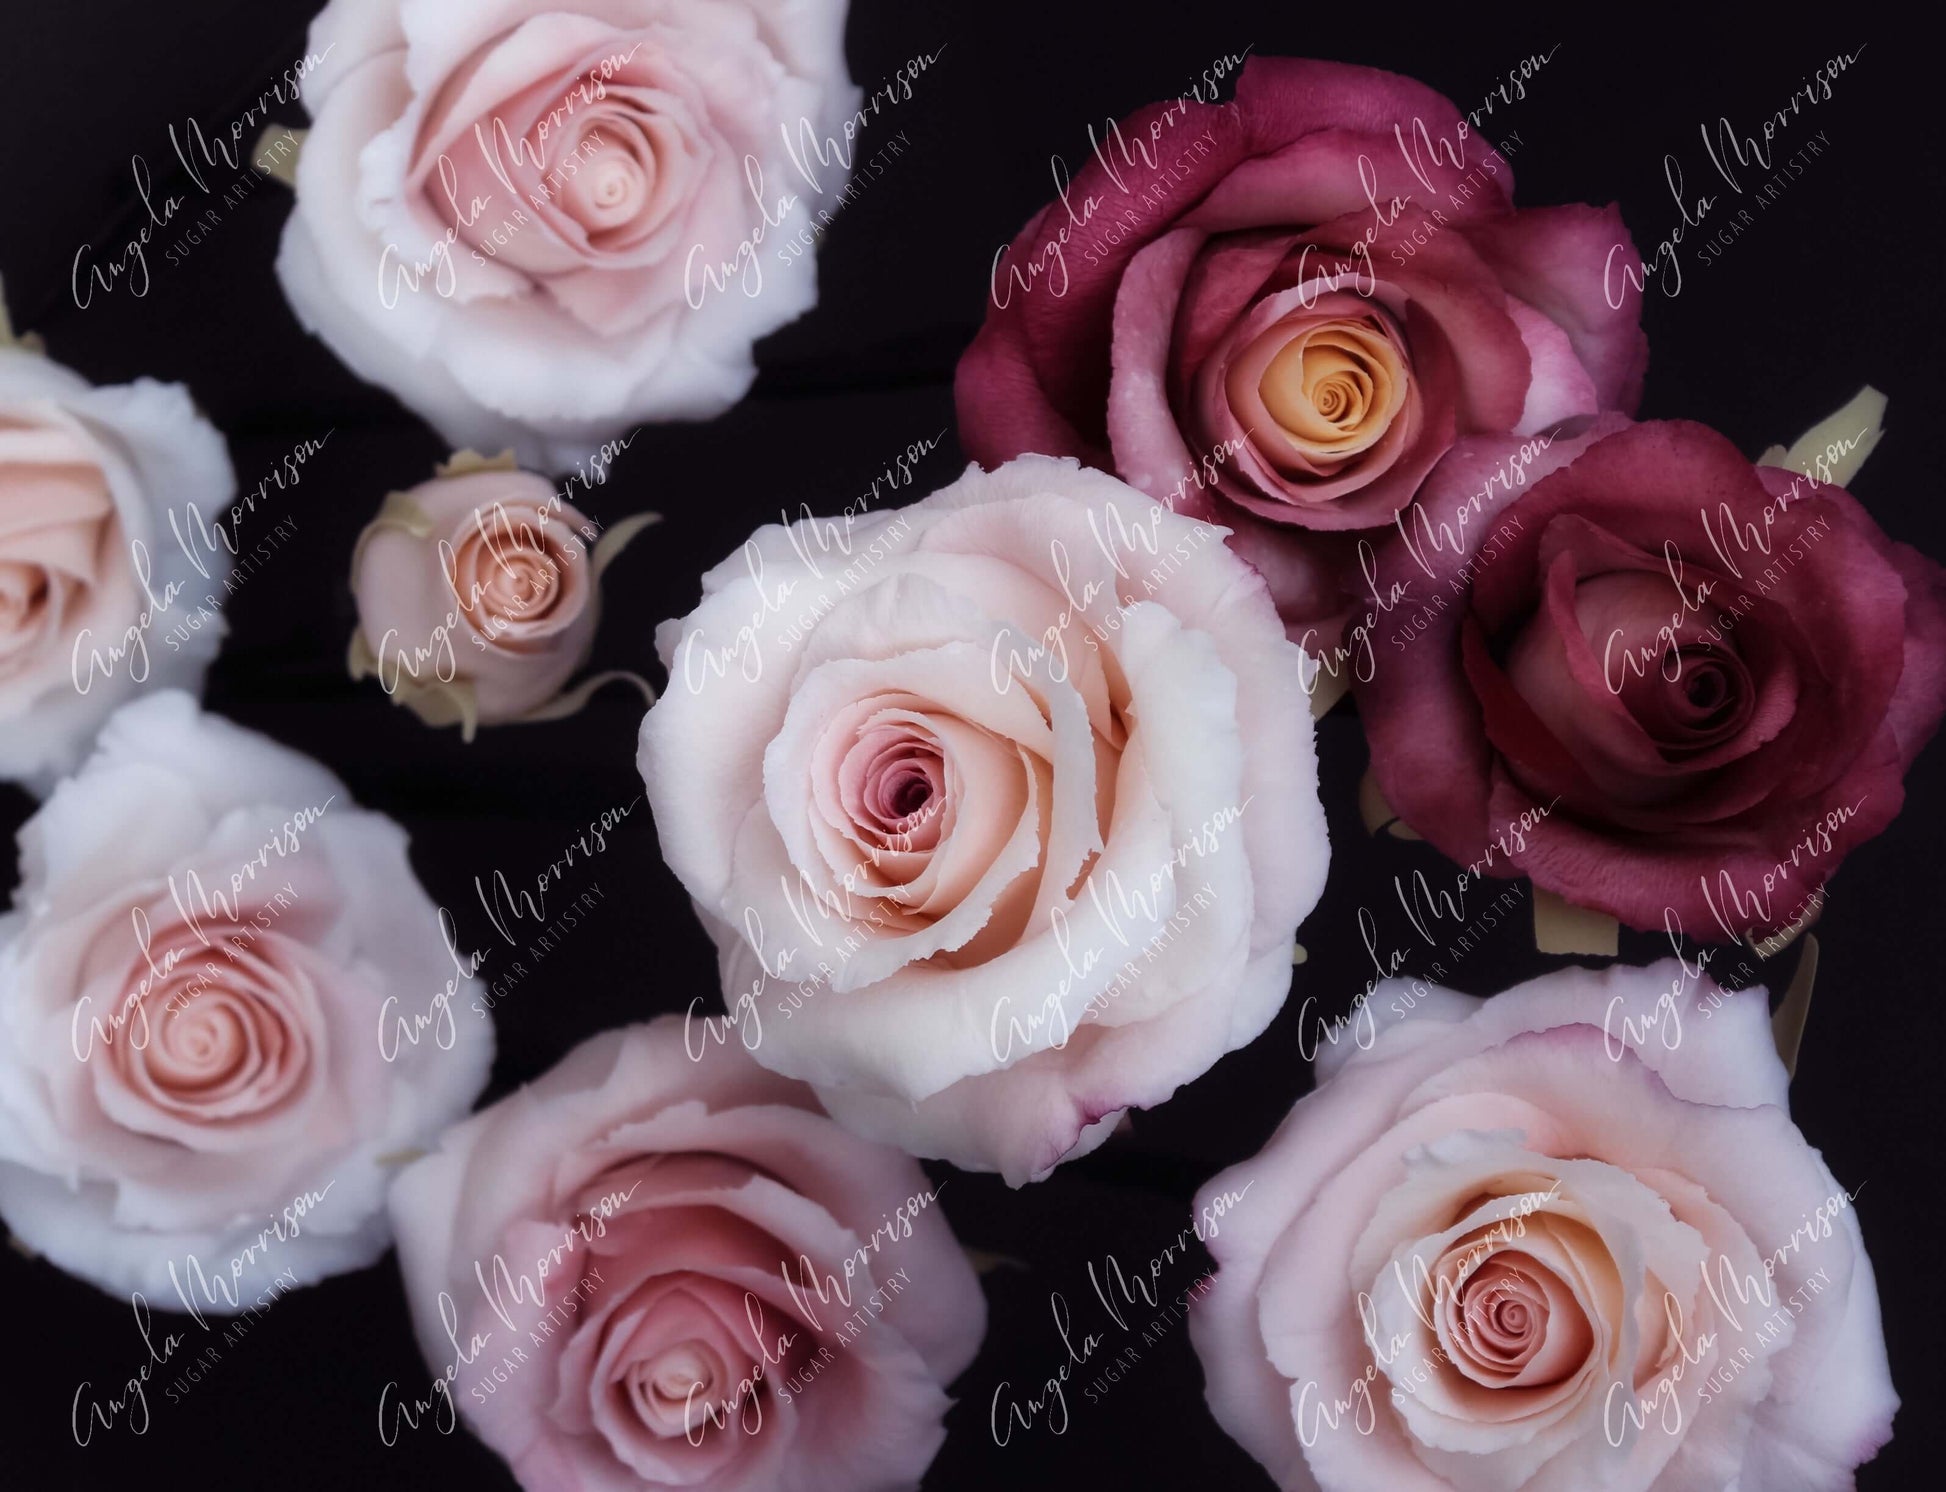 Artistic Roses Bouquet - AMSA007.